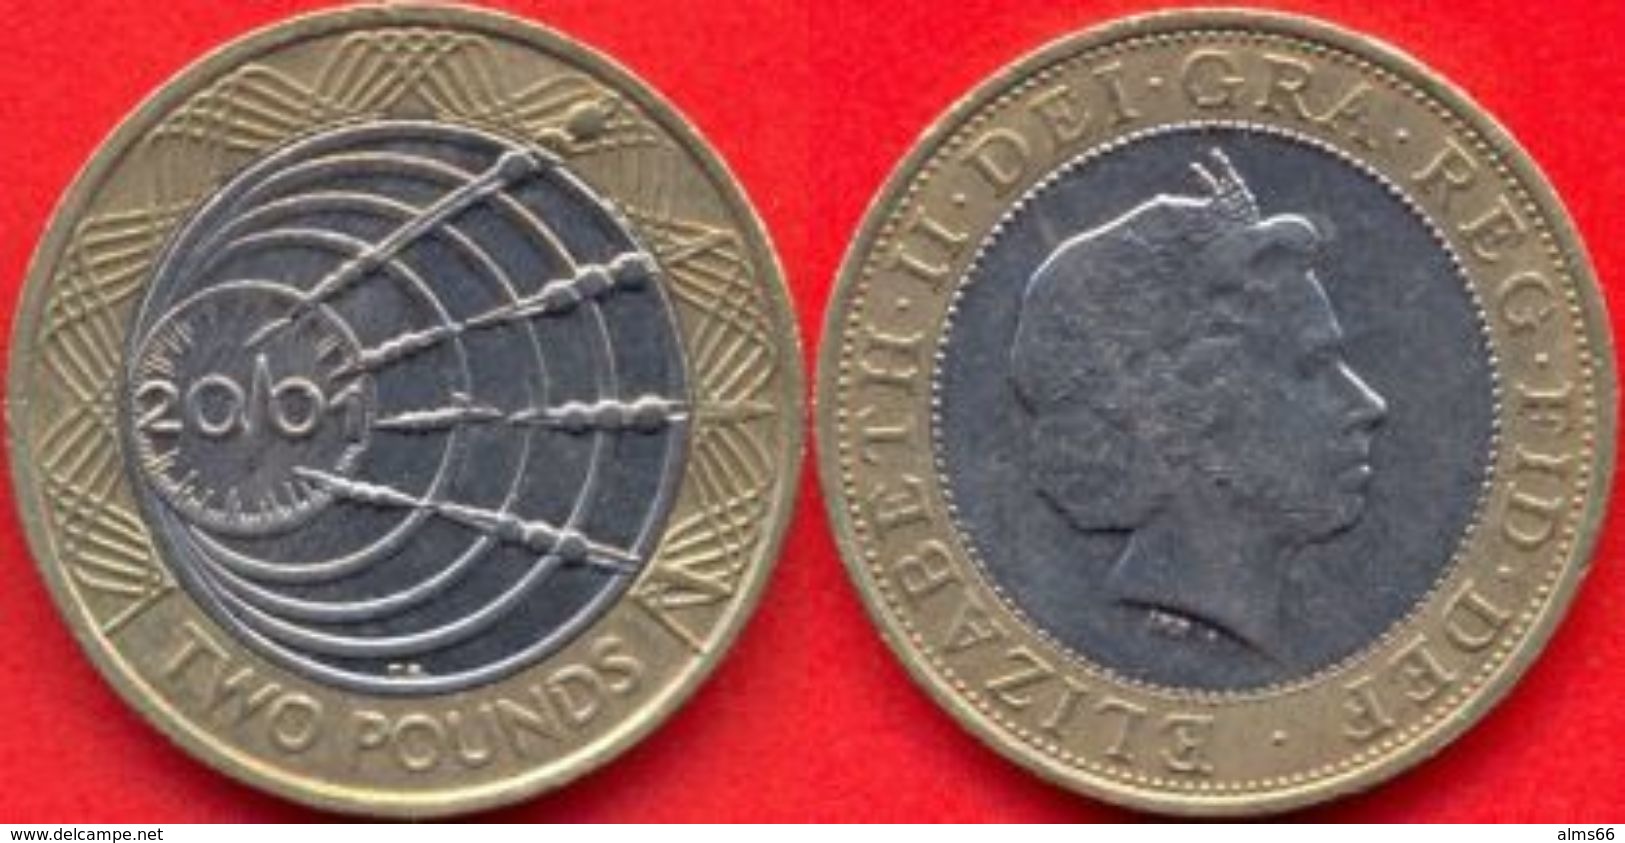 Great Britain UK 2 Pound 2001 VF  - Commemorative - - 2 Pounds